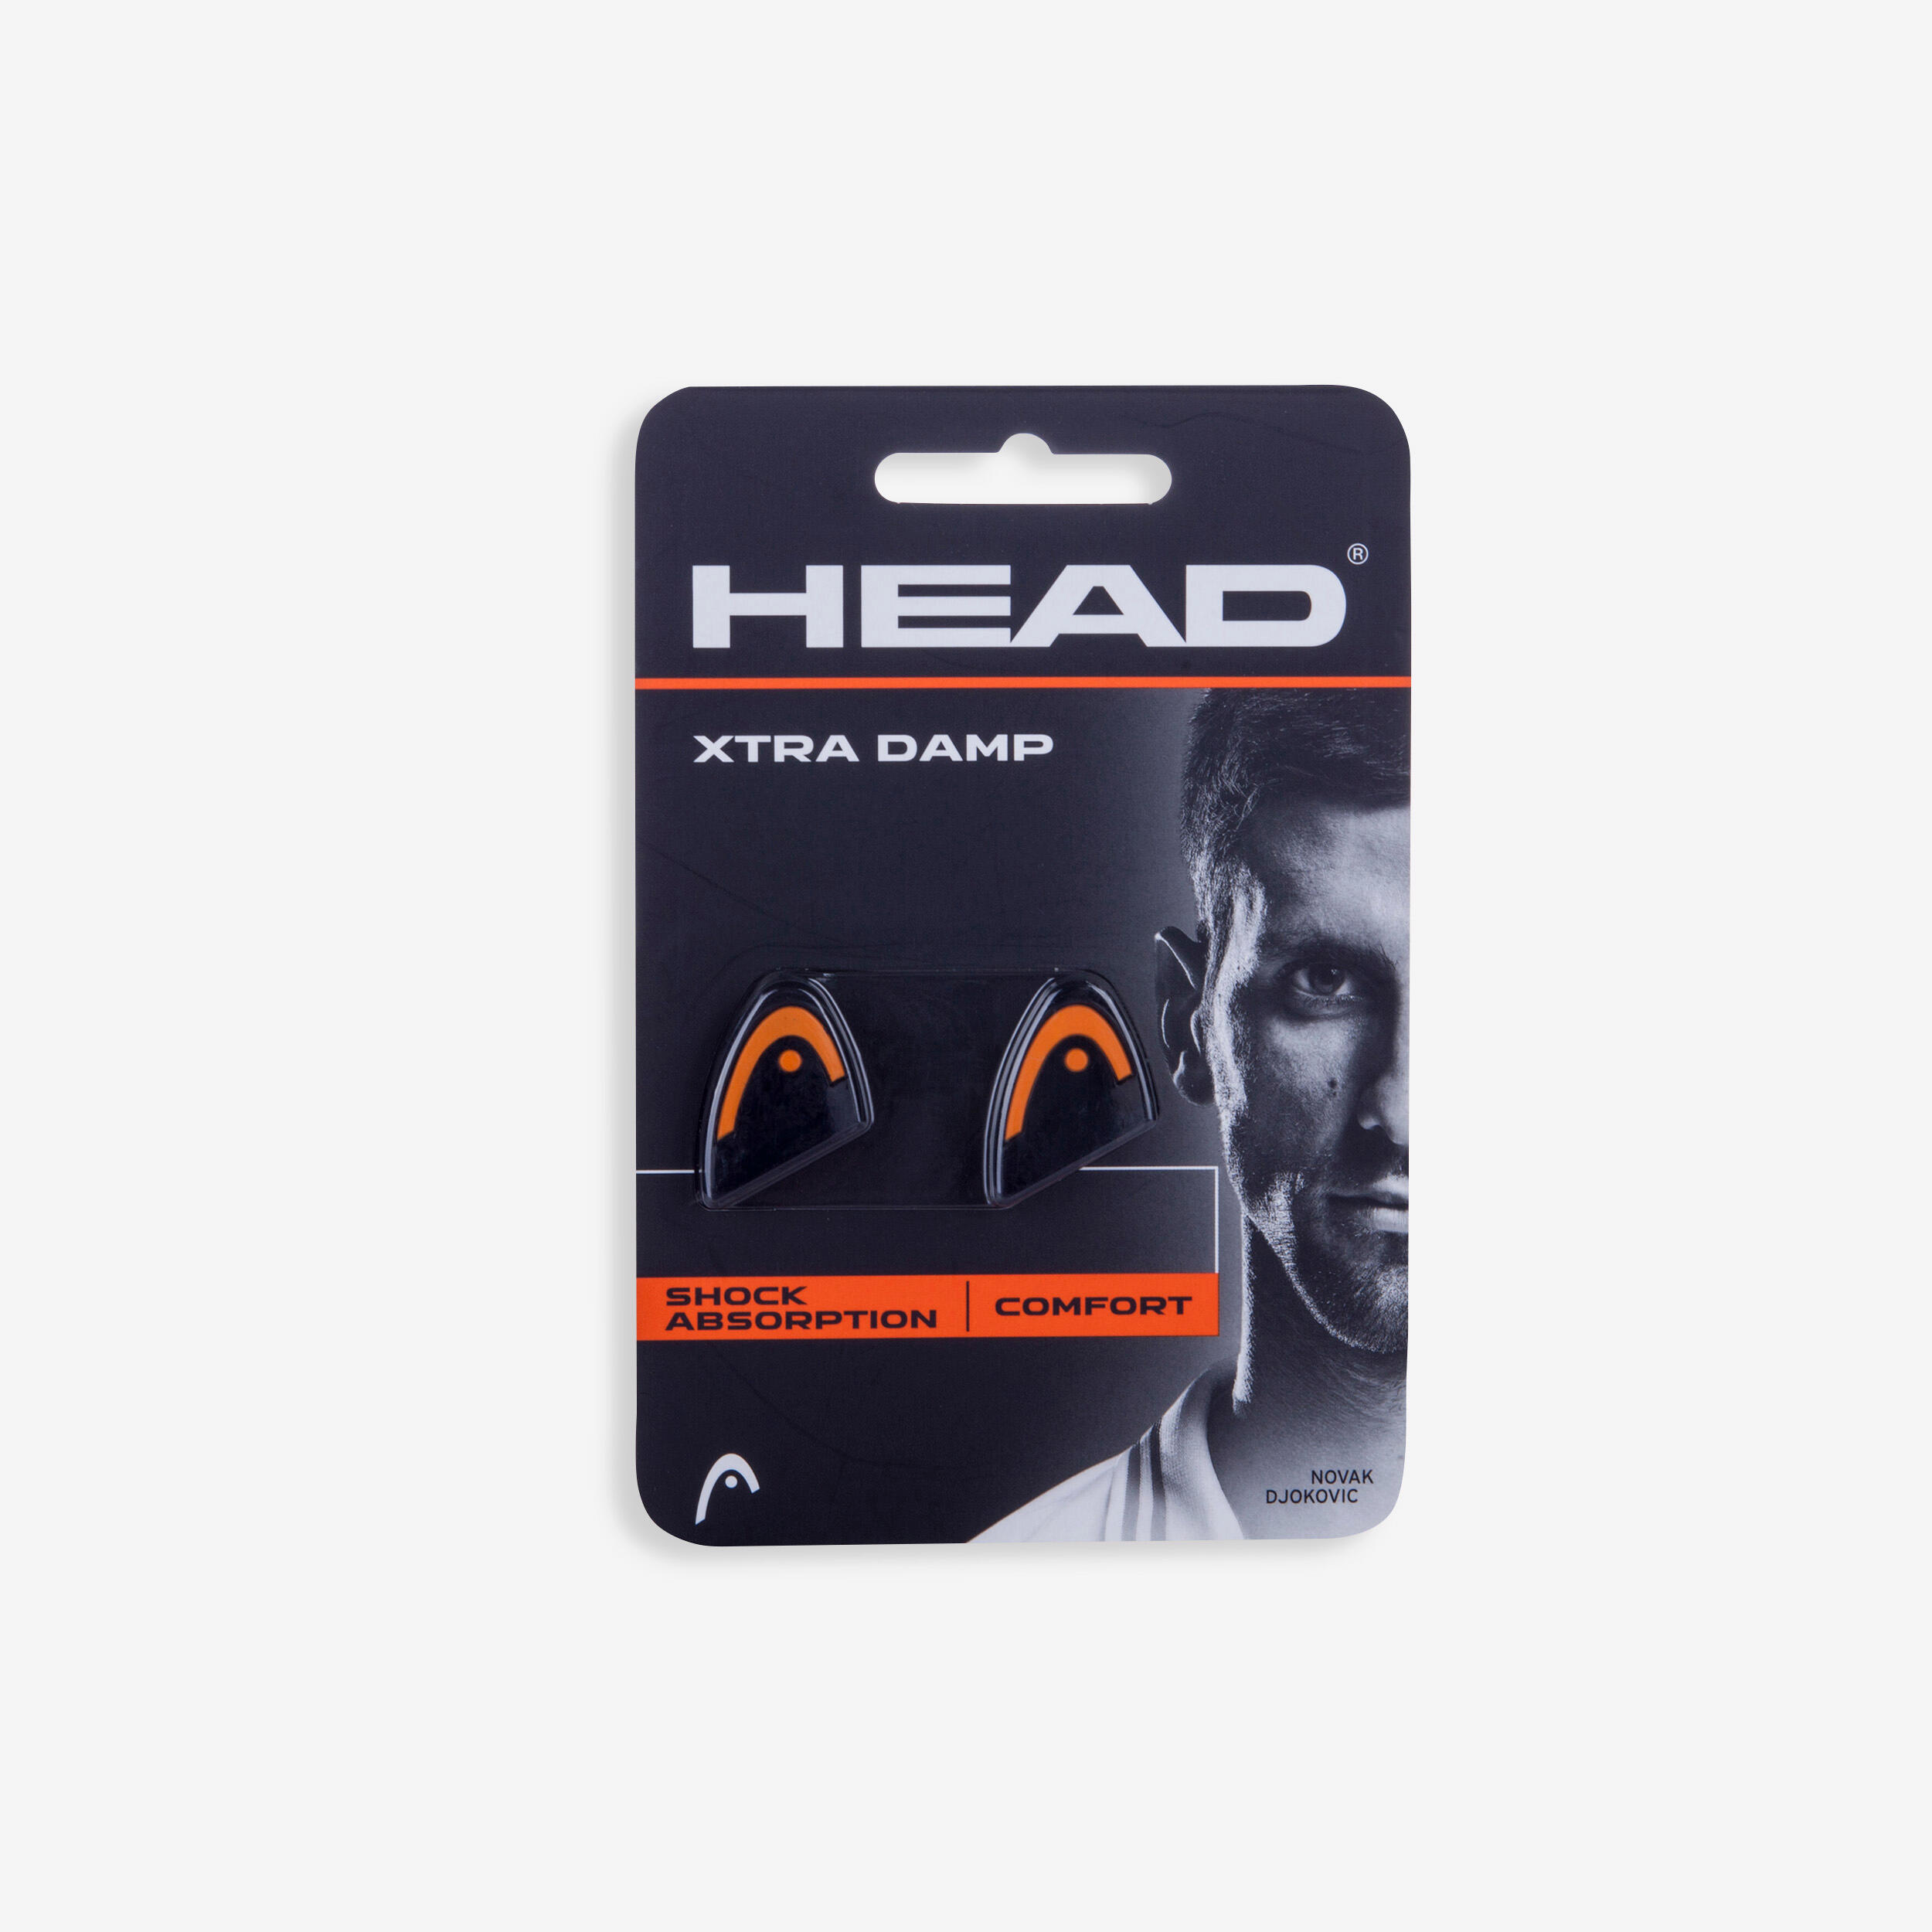 Photos - Tennis / Squash Accessory Head Xtra Damp Tennis Vibration Dampener - Black/orange 